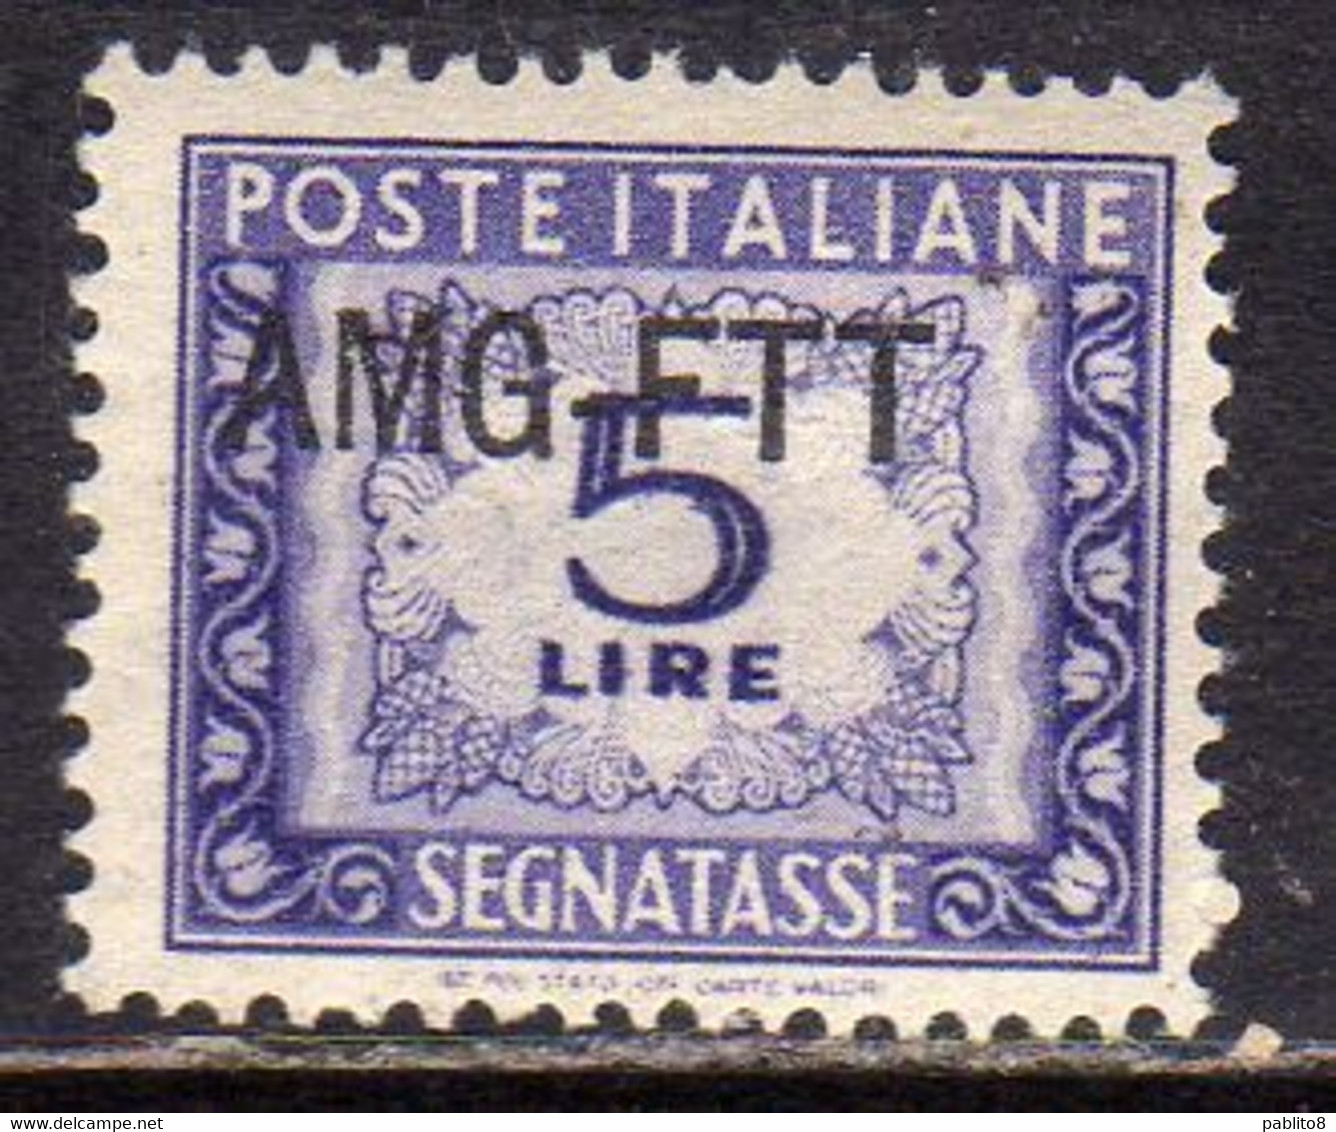 TRIESTE A 1949 1954 VARIETÀ VARIETY AMG-FTT SOPRASTAMPATO D'ITALIA ITALY SEGNATASSE POSTAGE DUE TAXES TASSE LIRE 5 MNH - Postage Due